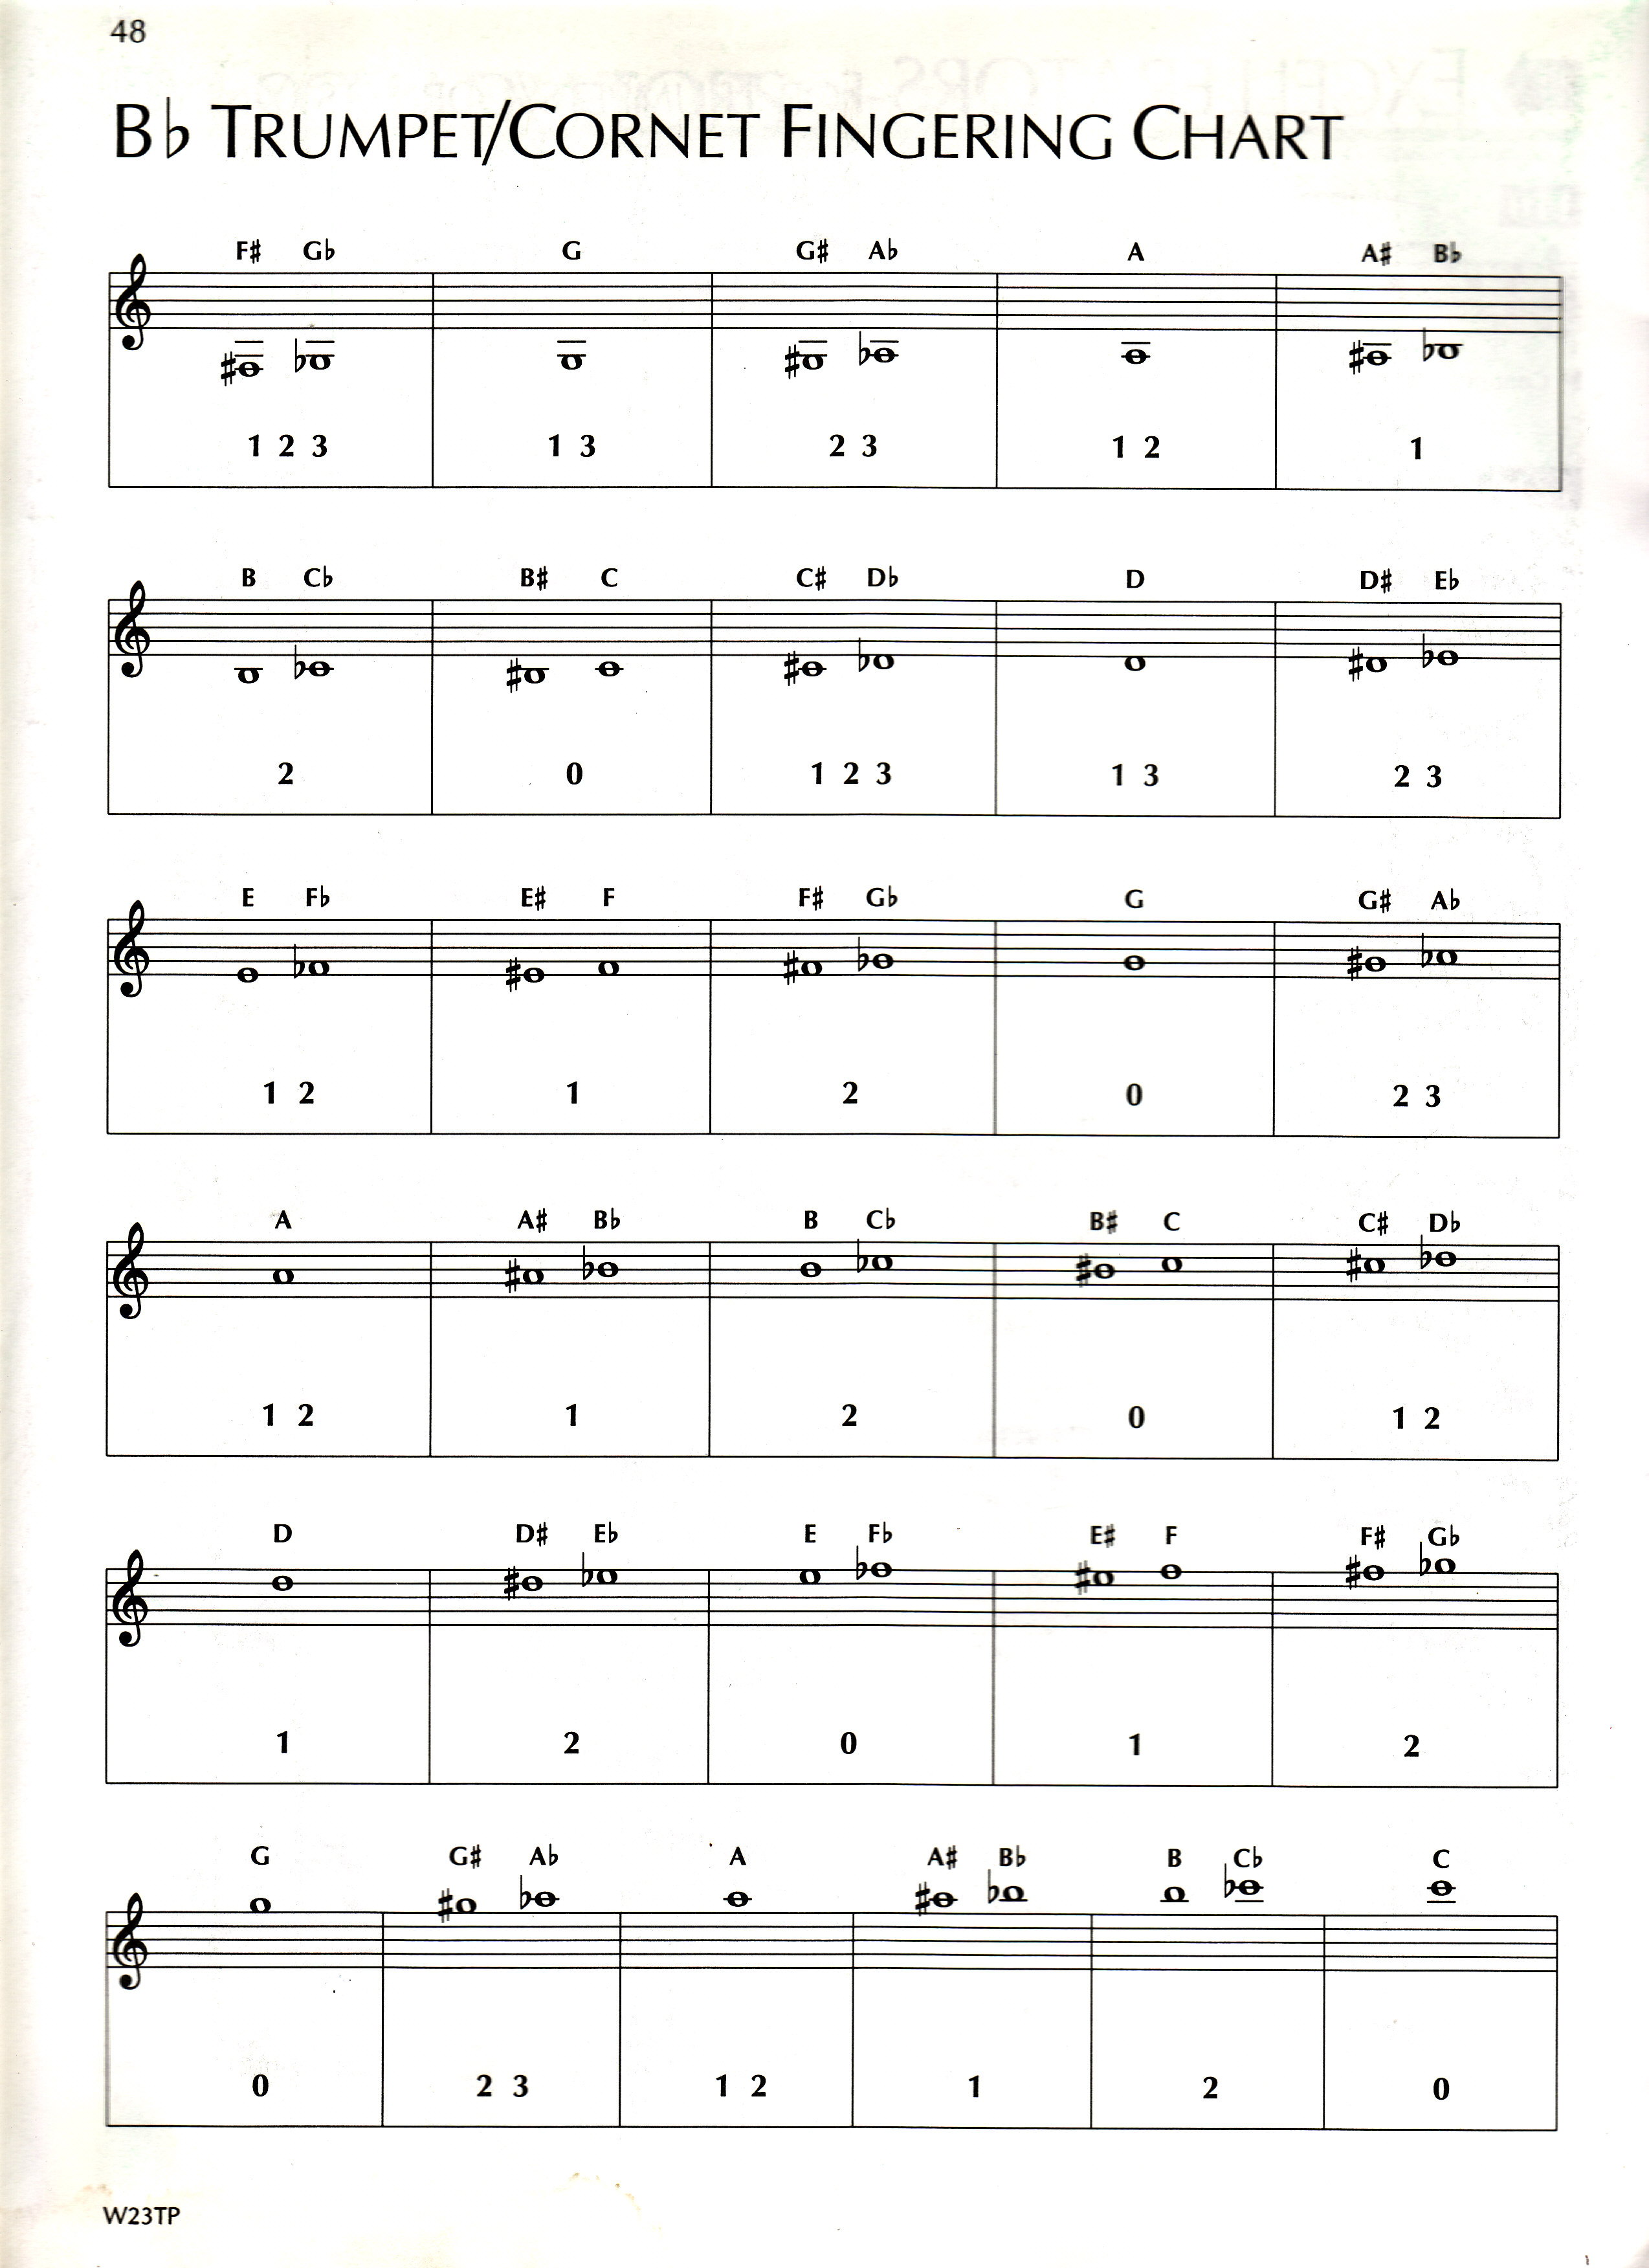 Trombone Position Chart Pdf